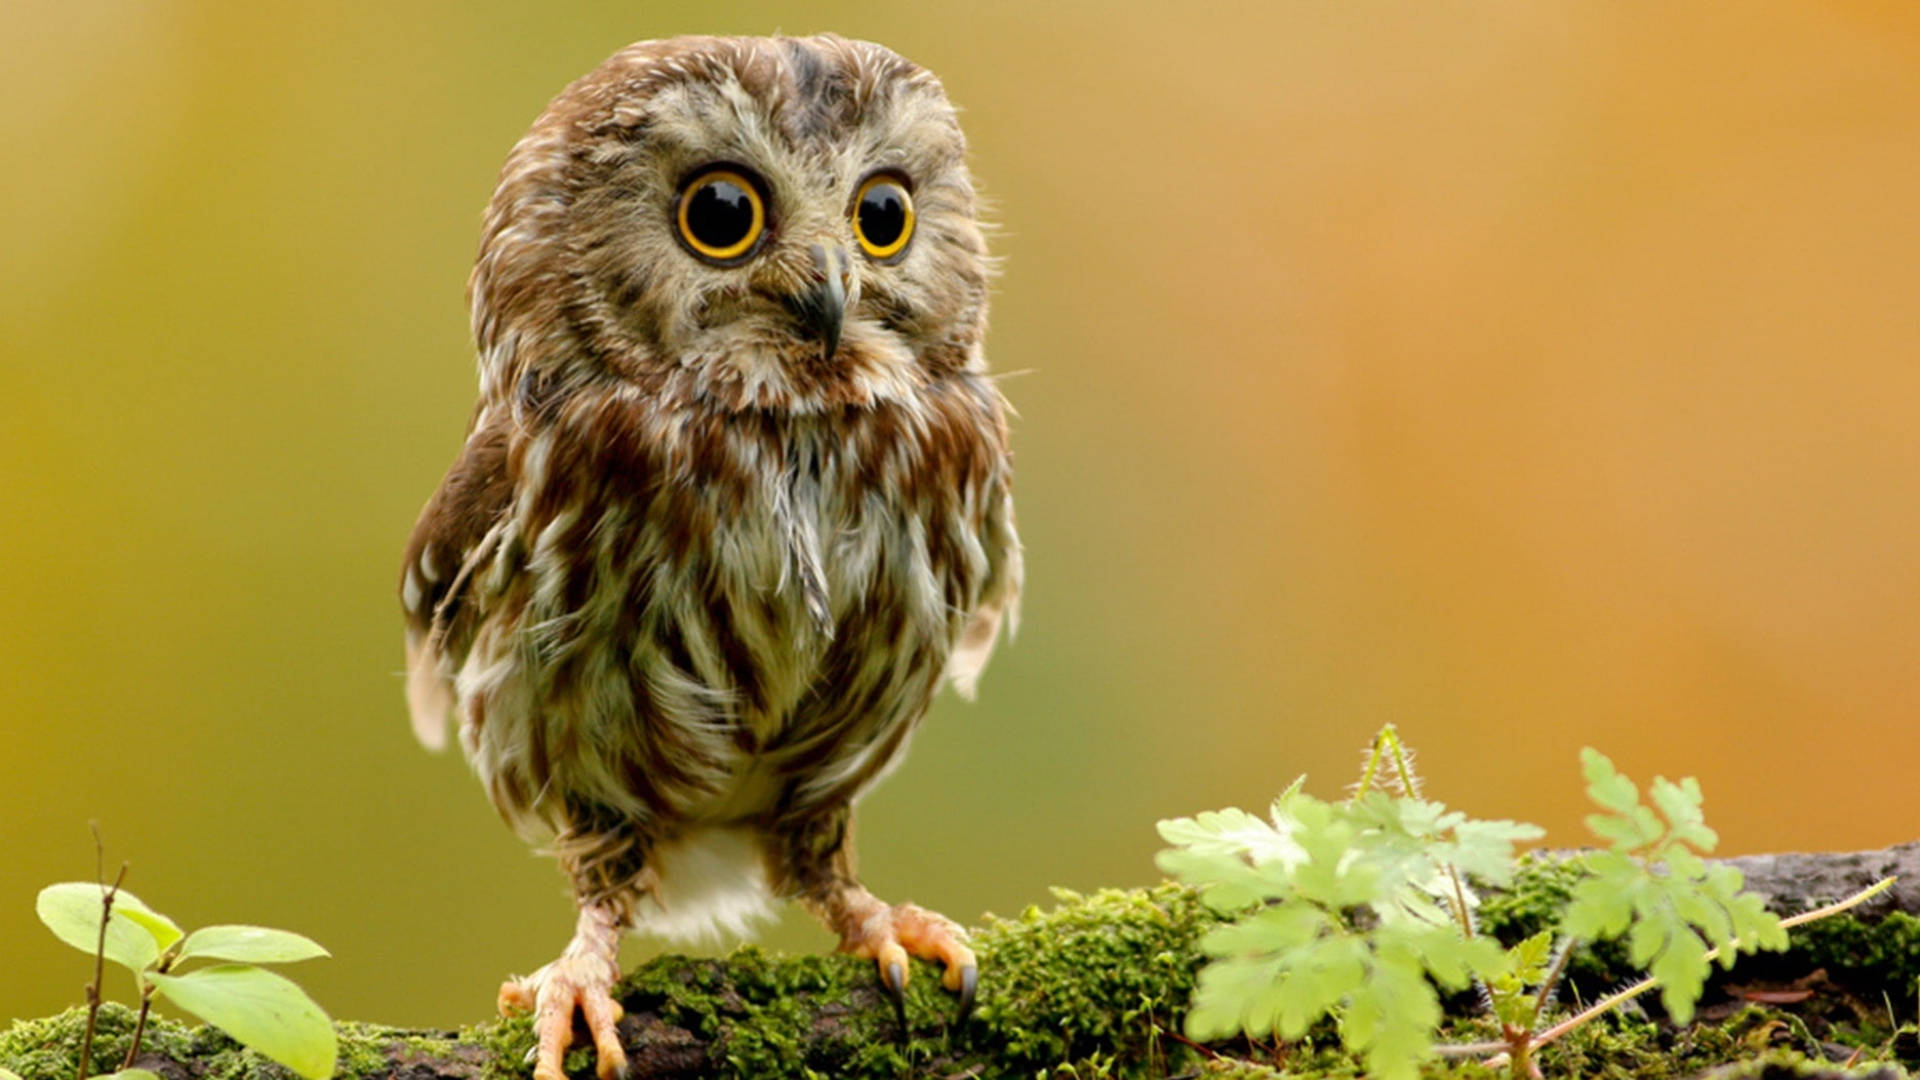 Cute Baby Owl